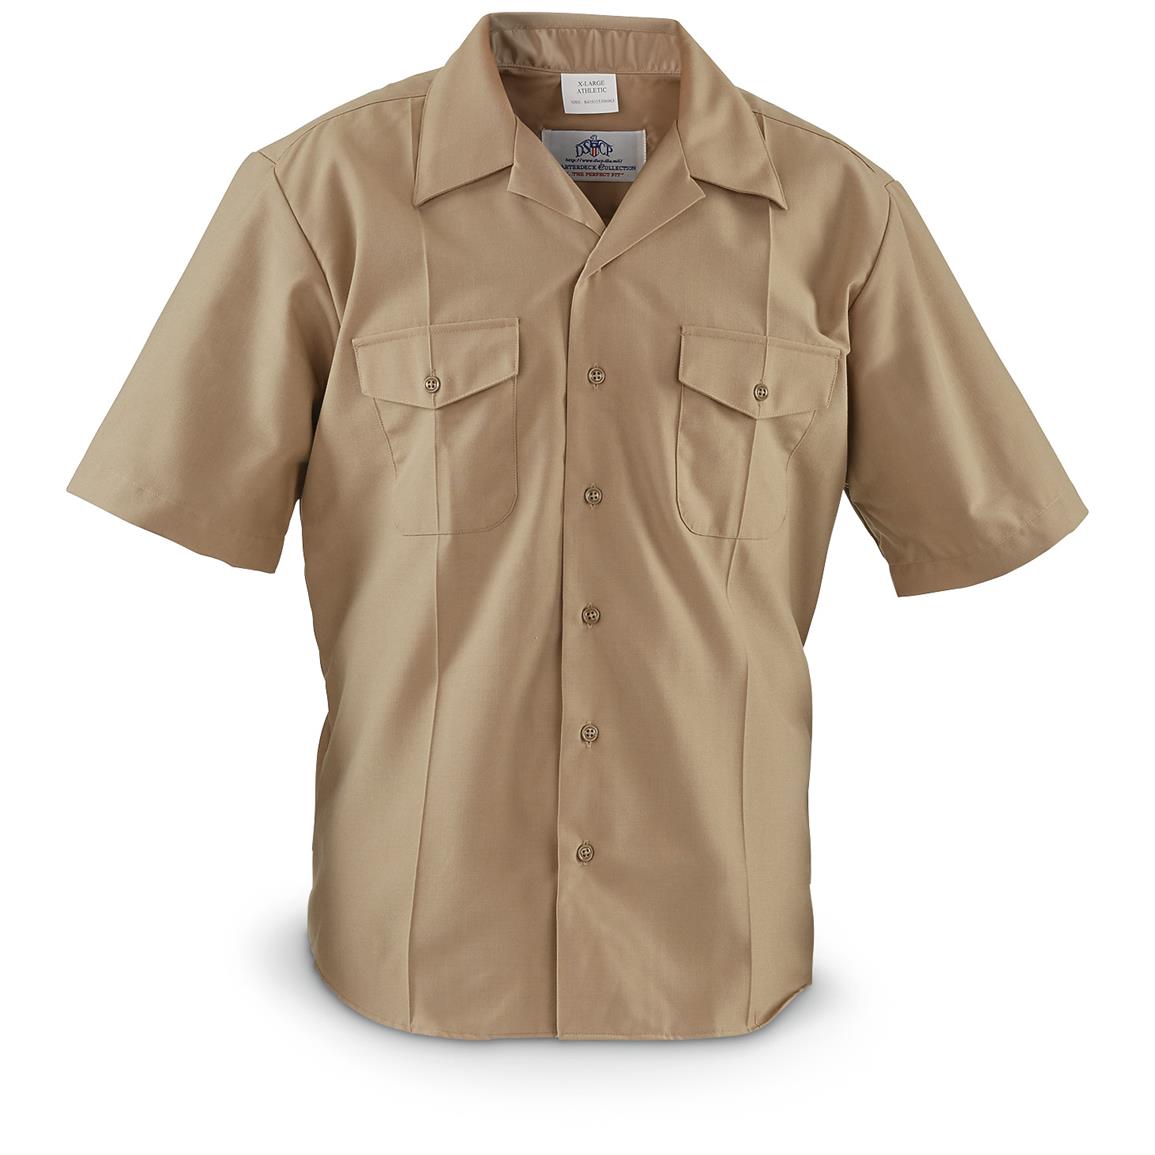 2 New Men's U.S. Navy Surplus Service Shirts in Larger Sizes - 633768 ...